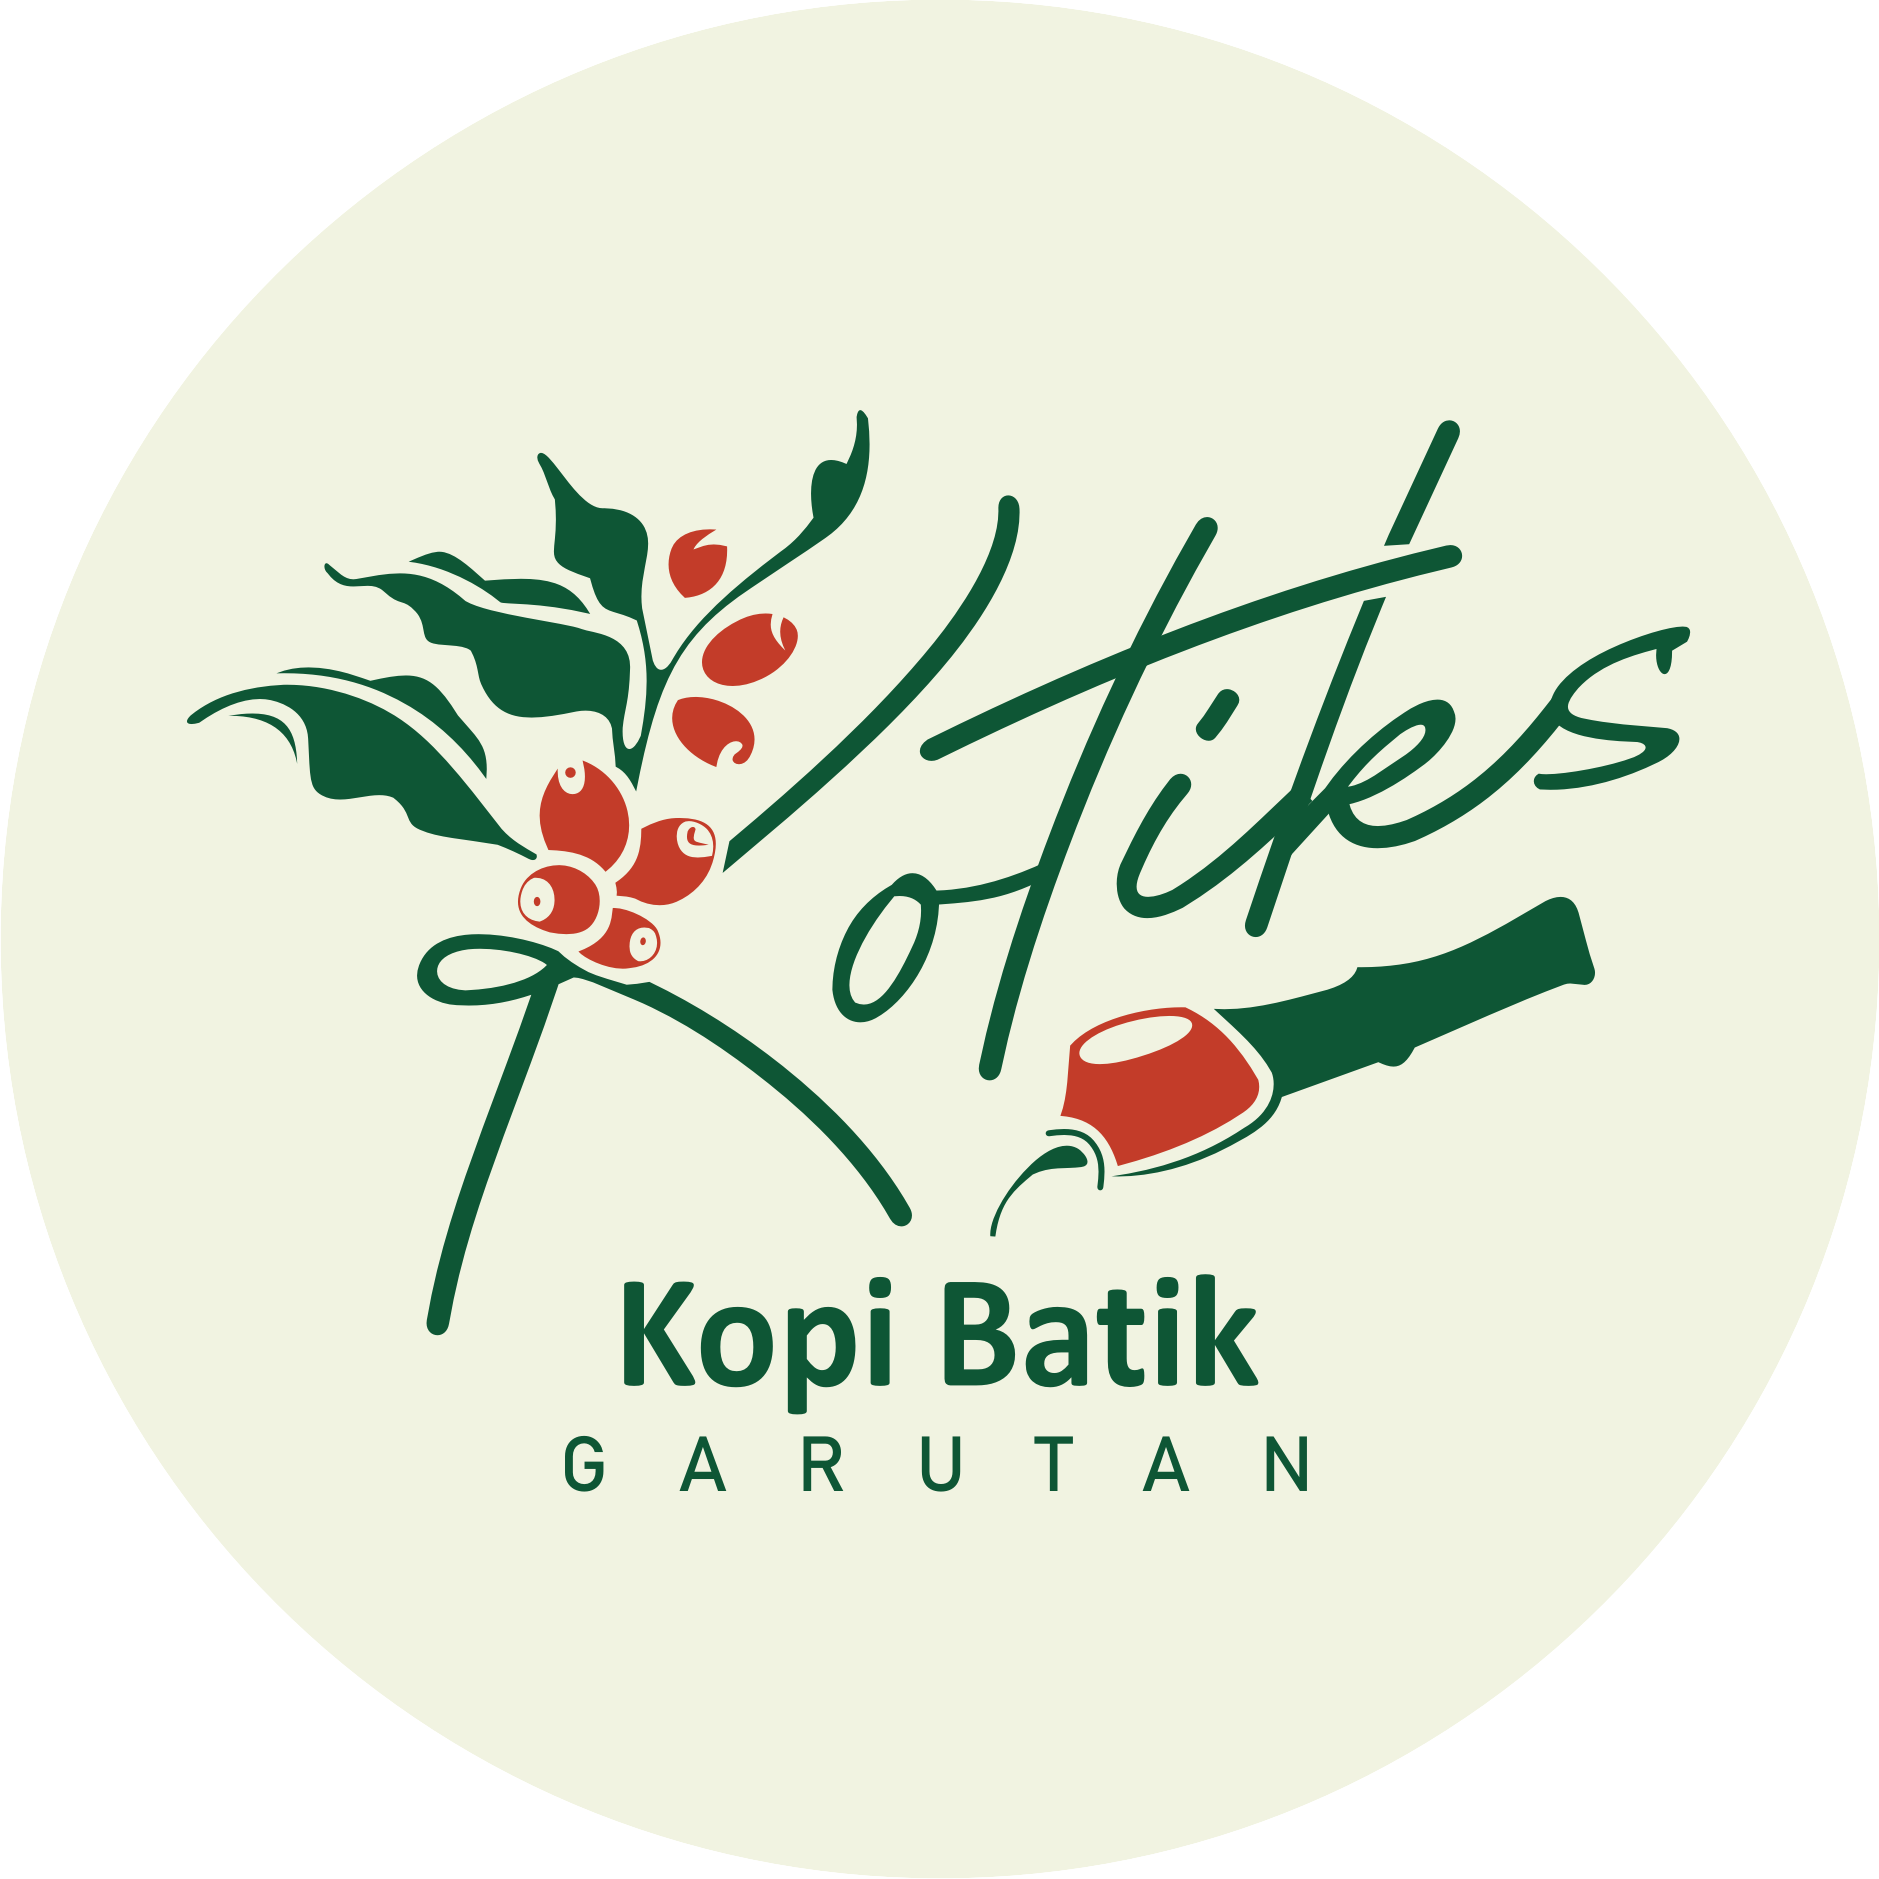 Klien Seniman Koding, Client Seniman Koding, Doni As'rul Afandi, Doni Asrul Afandi, Kopi Batik Garut